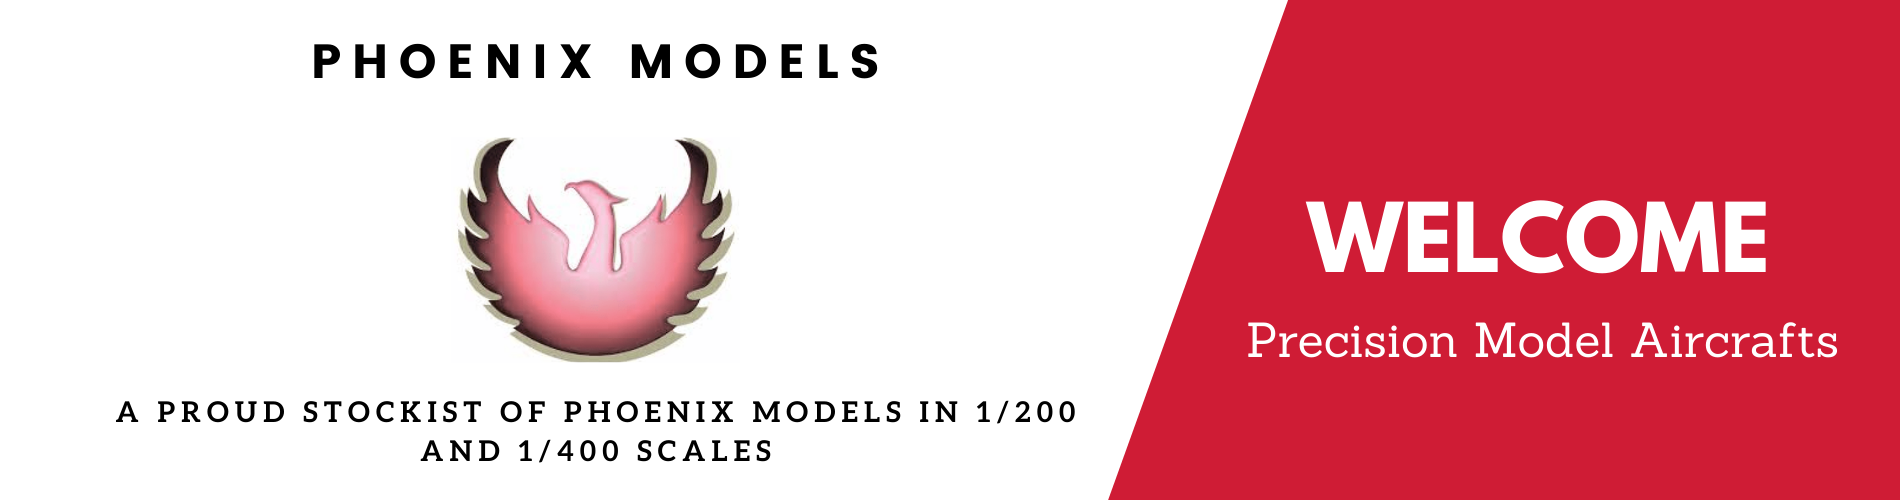 stockist of phoenix models